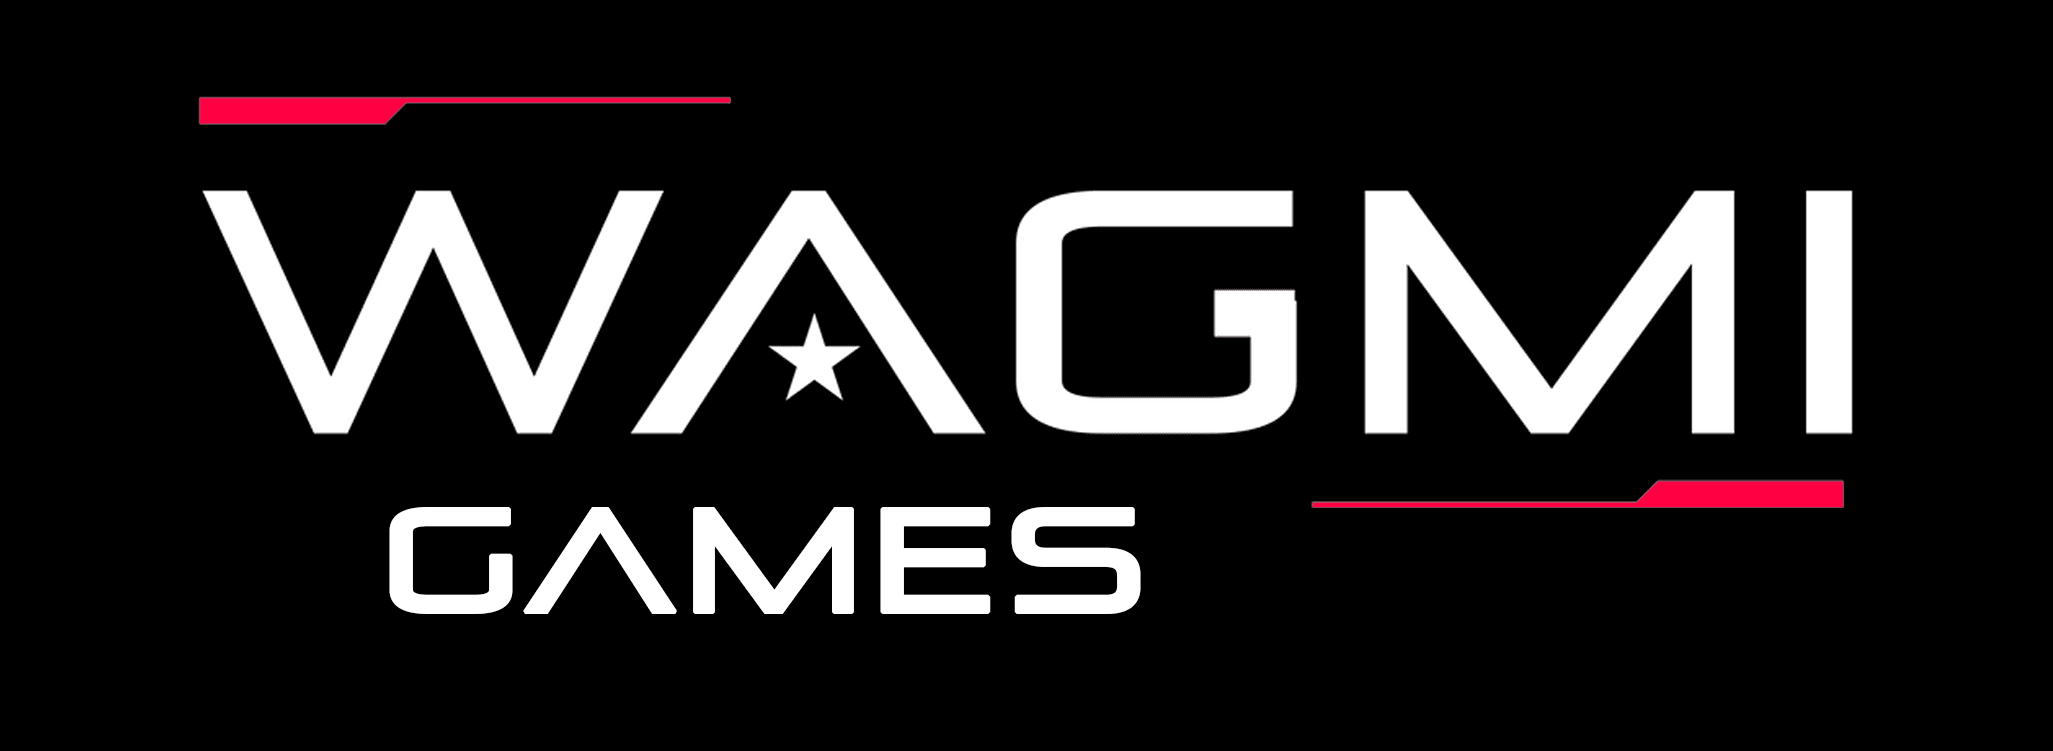 Wagmi-games-logo-on-bl.png